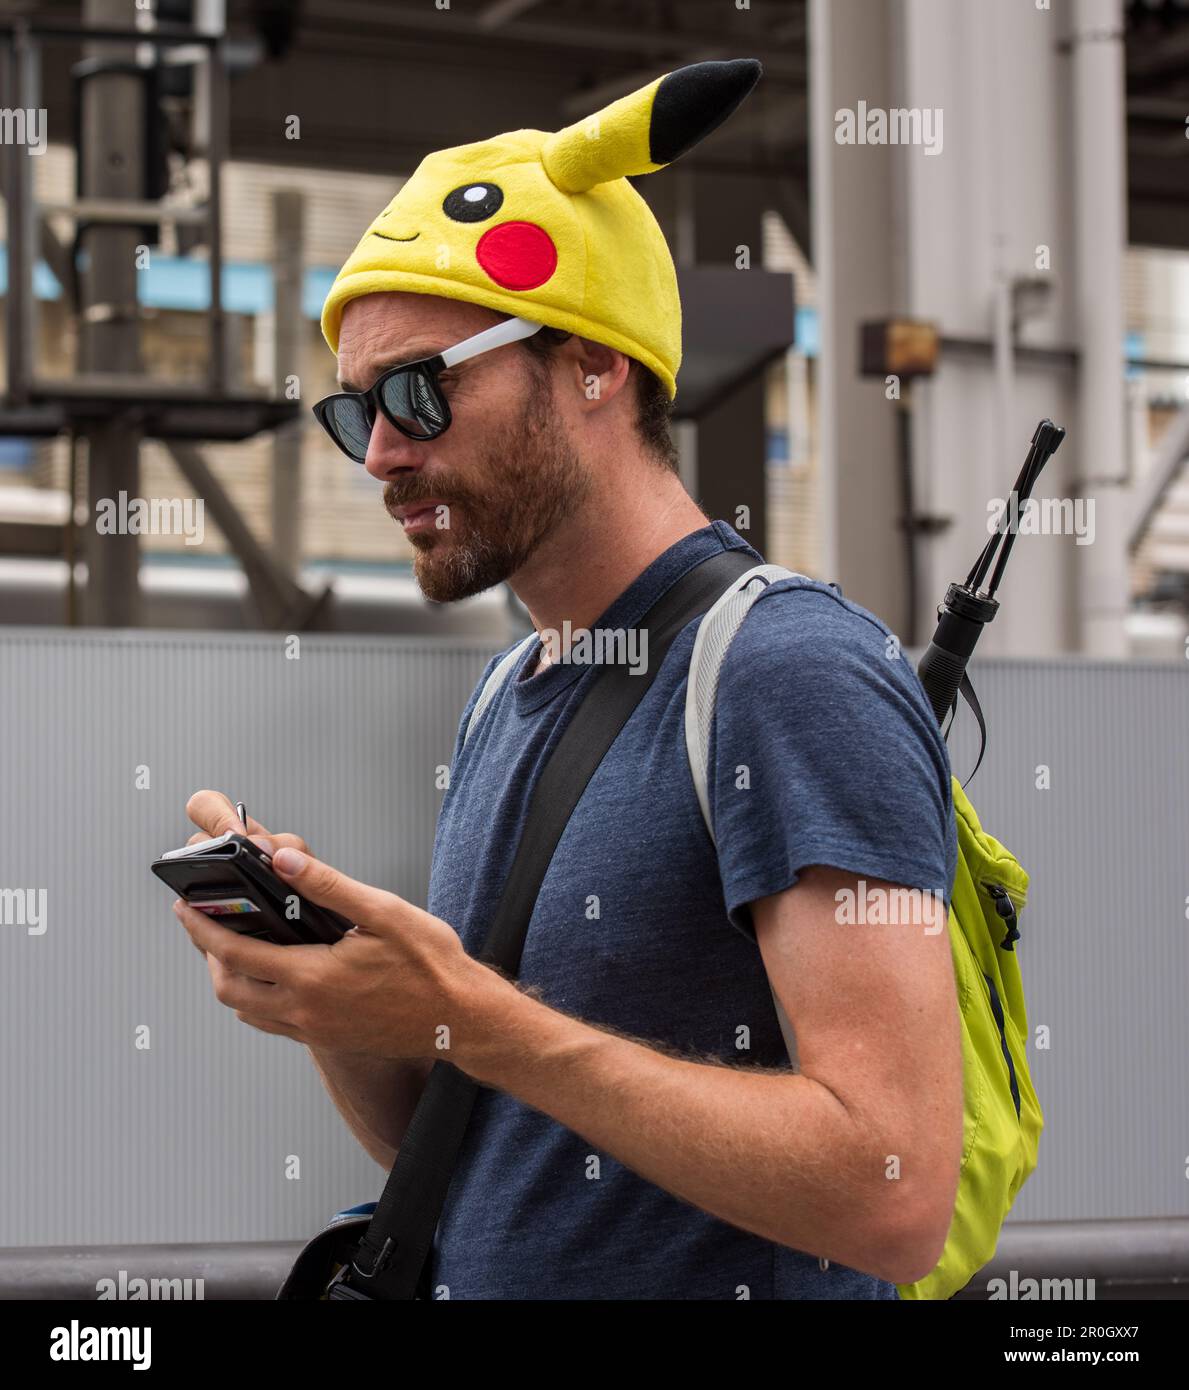  Cappello Pikachu